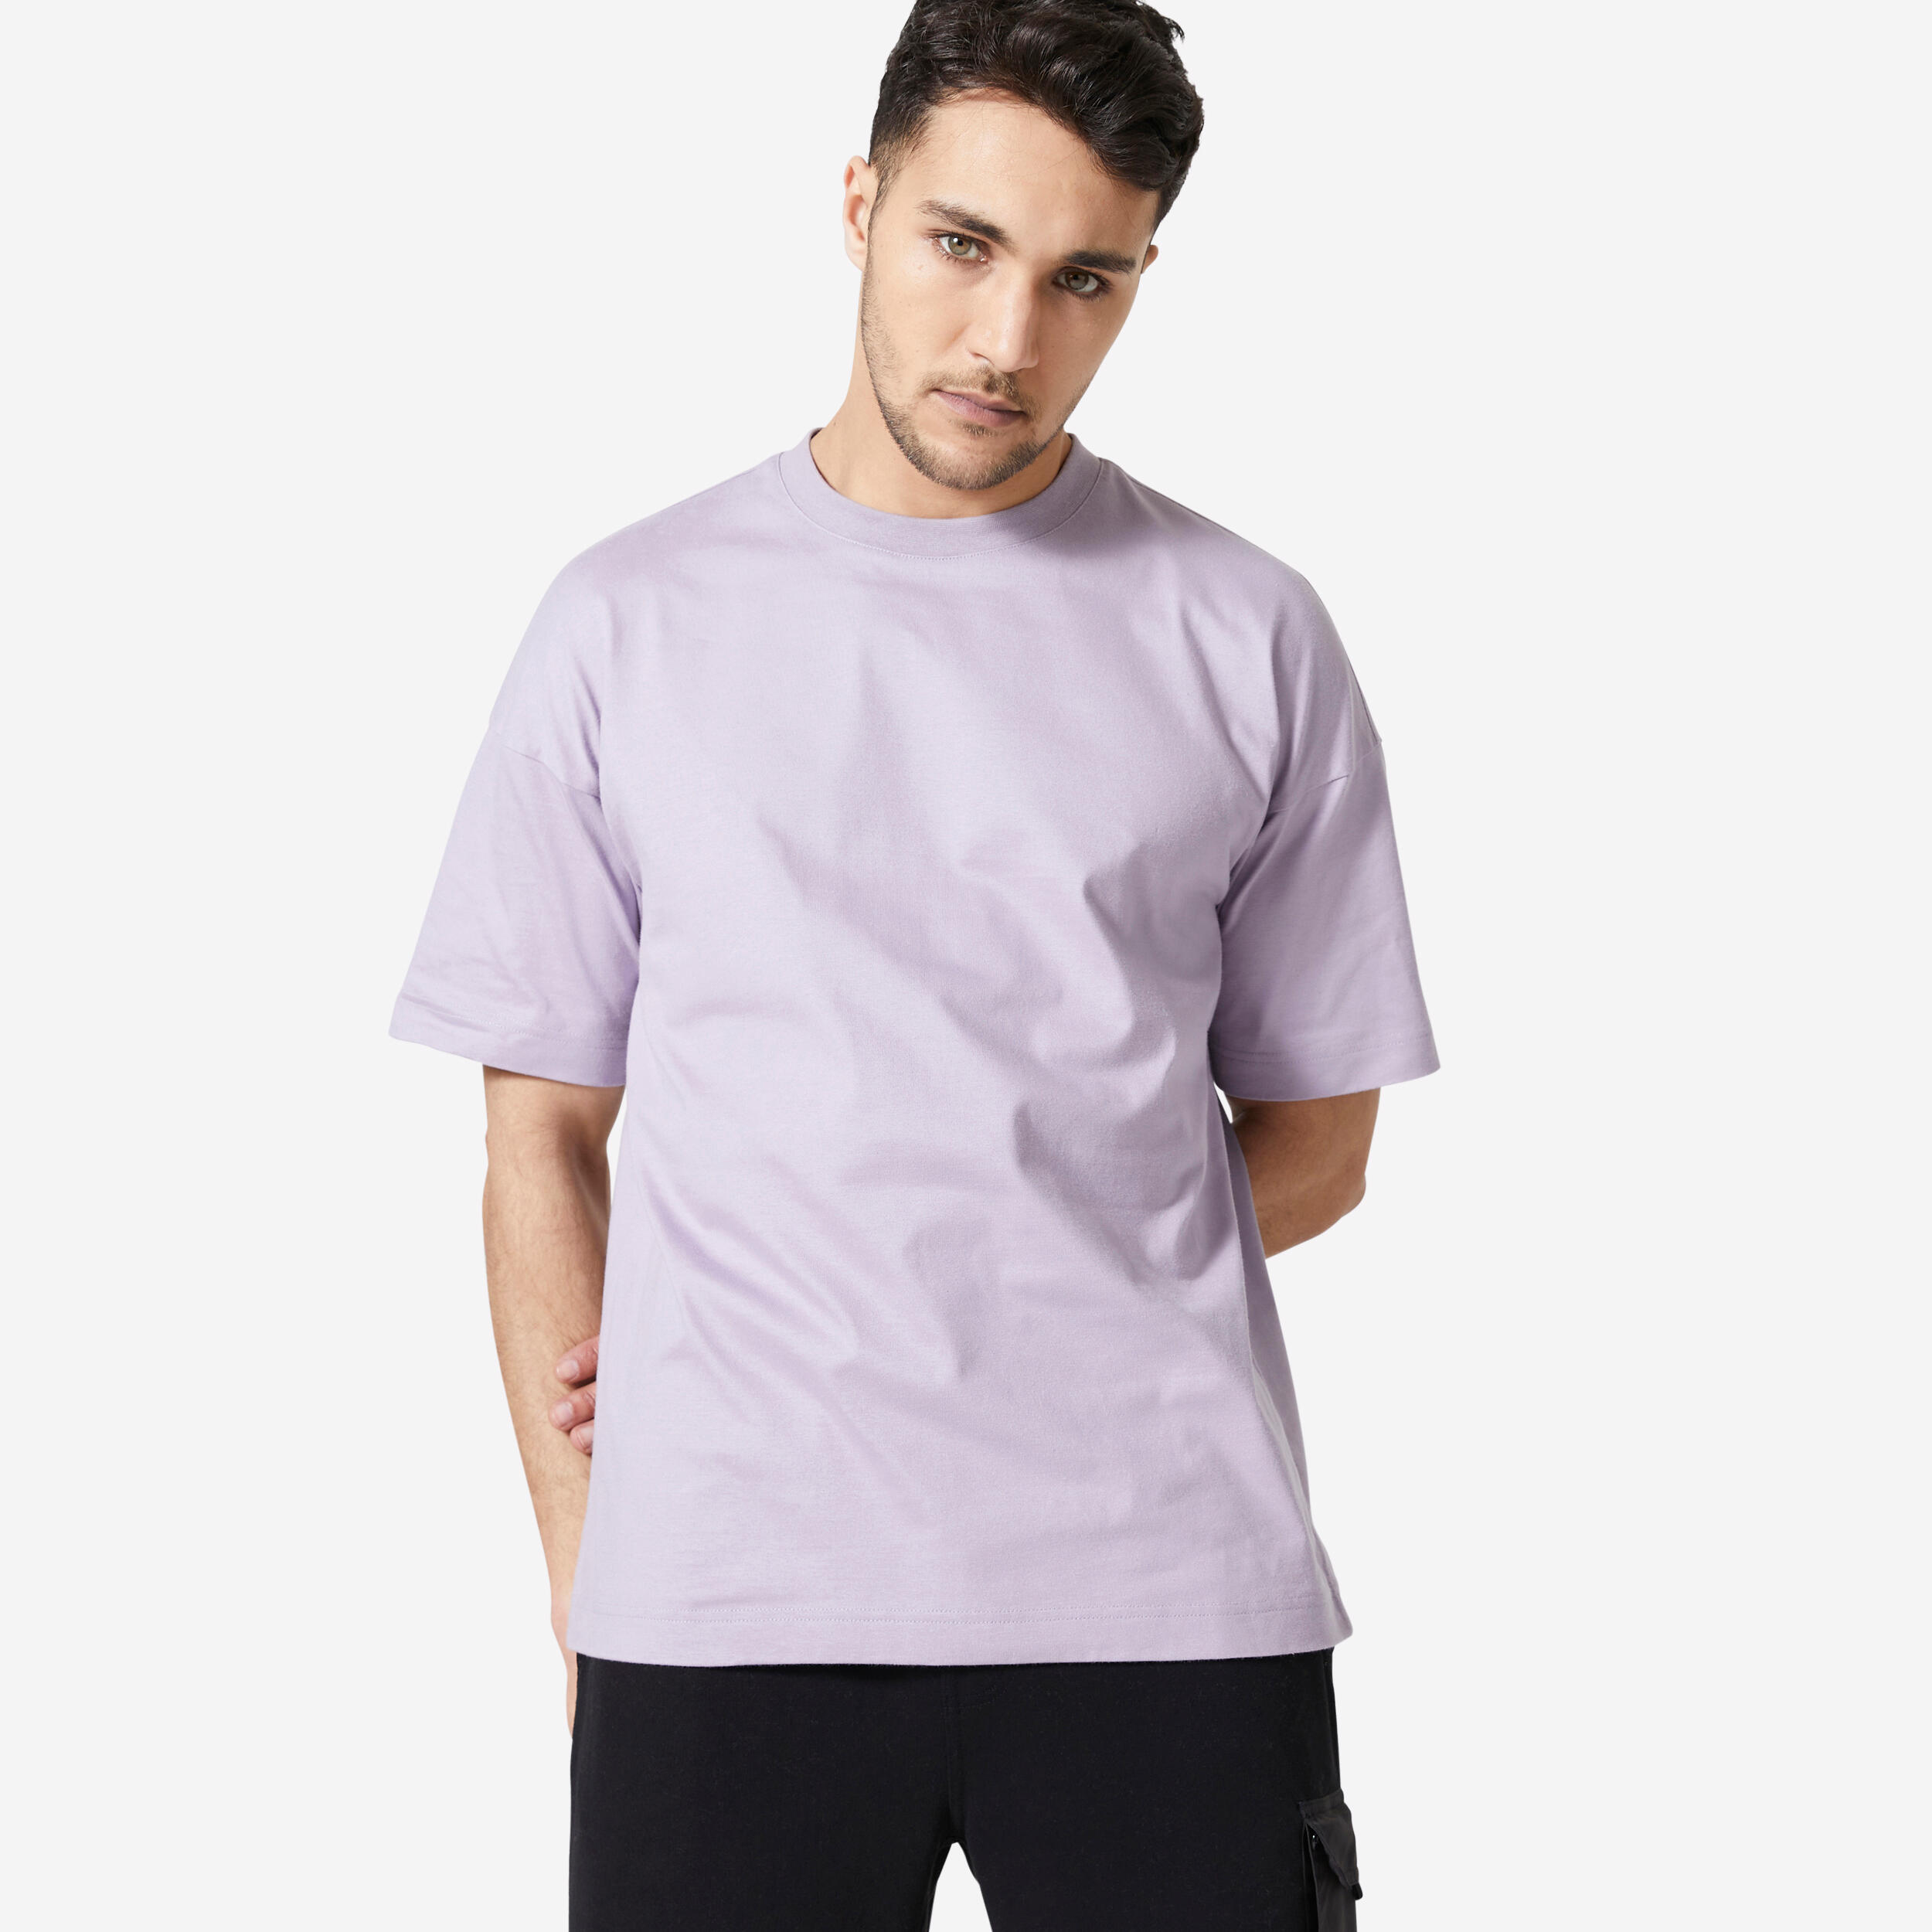 DOMYOS Men's Loose-Fit T-Shirt 520 - Purple